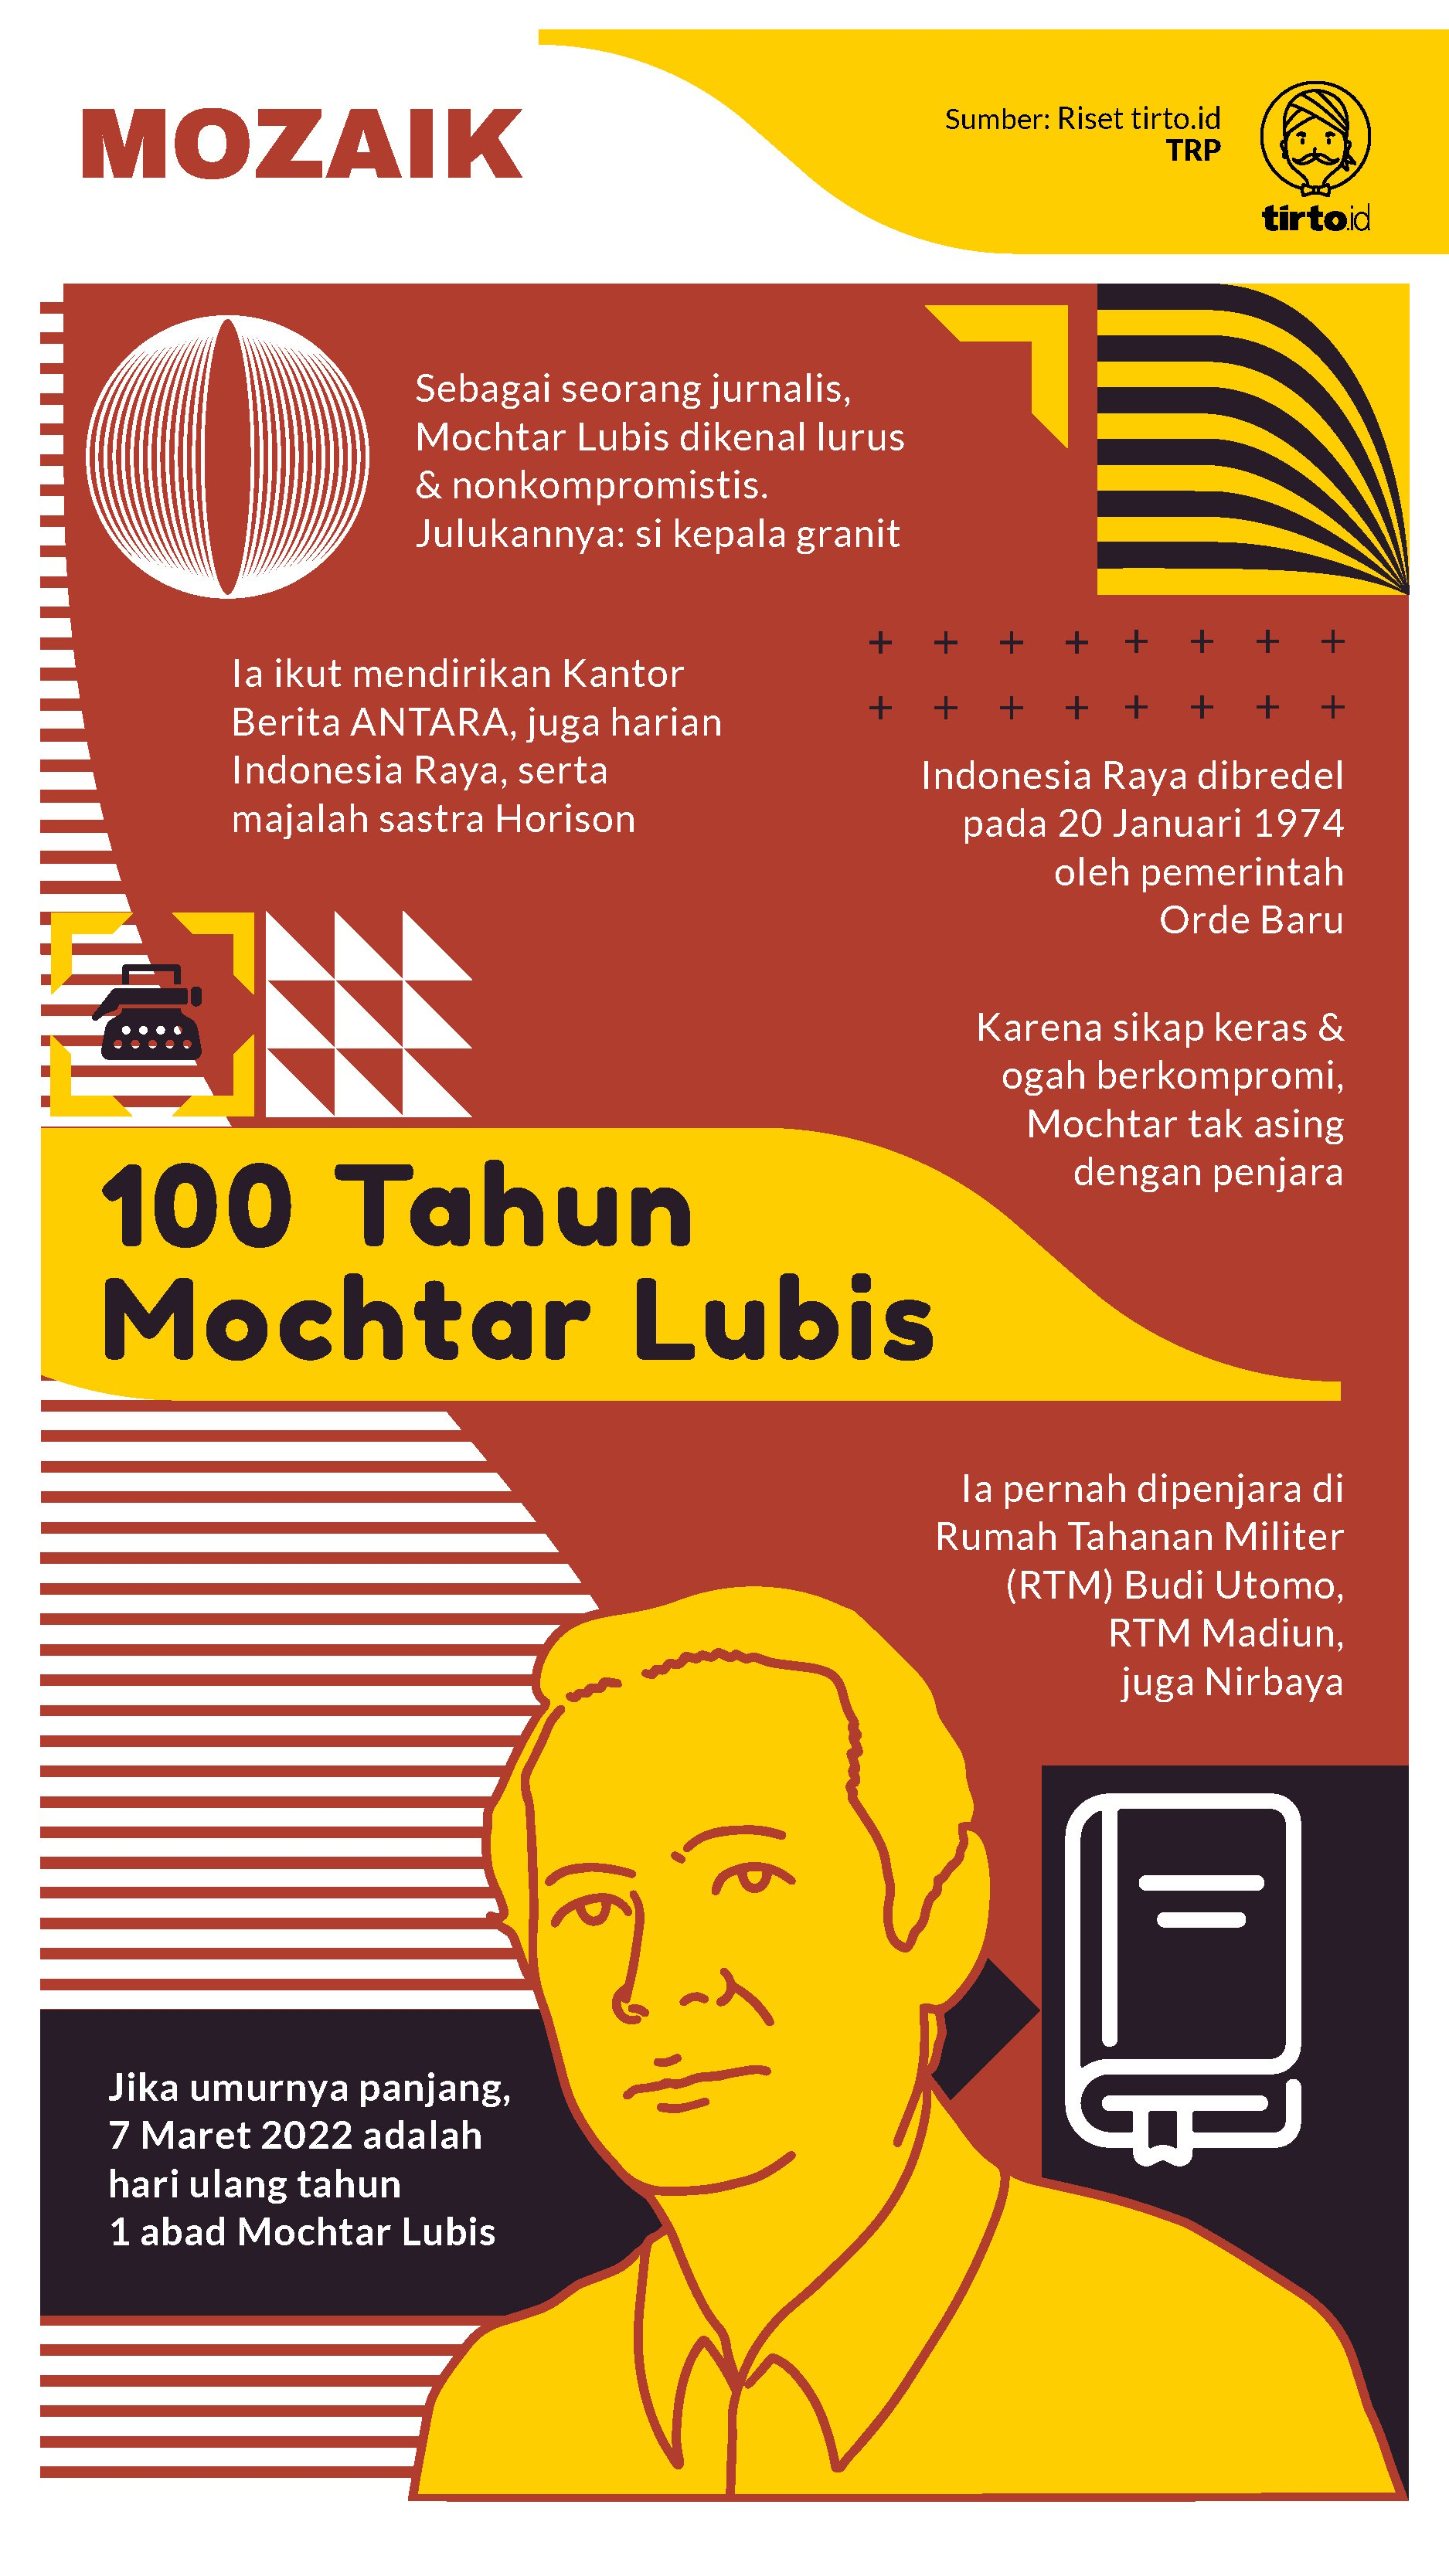 Infografik Mozaik Mochtar Lubis